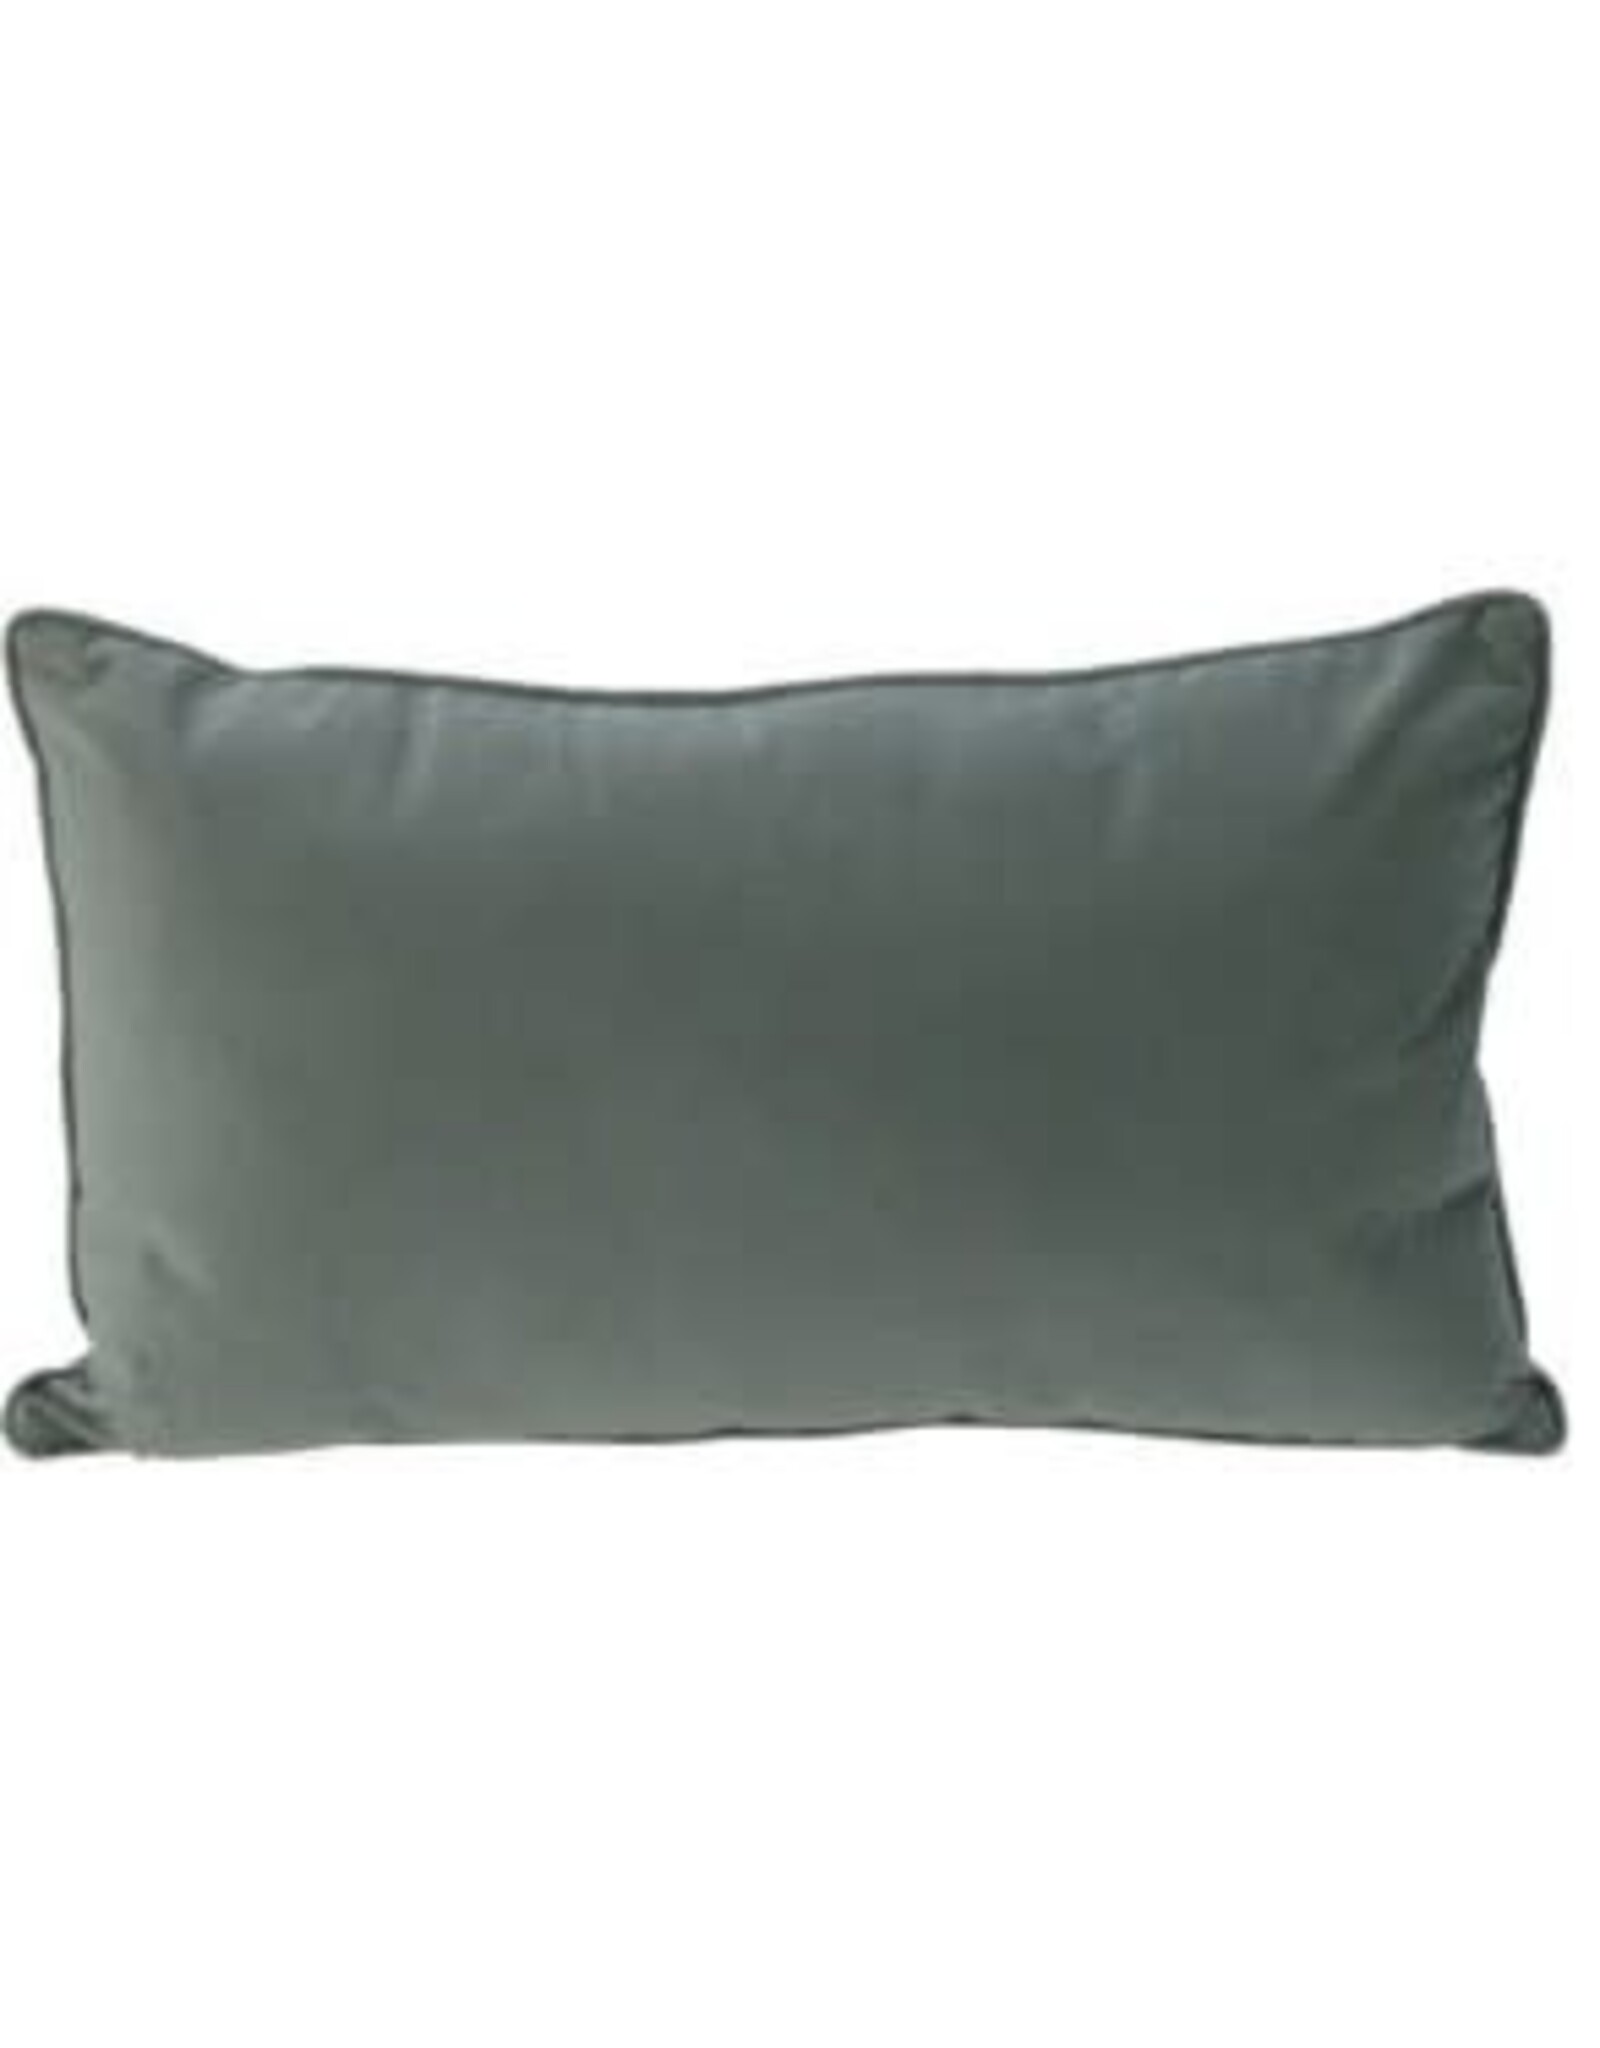 Cushion 12 x 20" Light Green HZ1012090